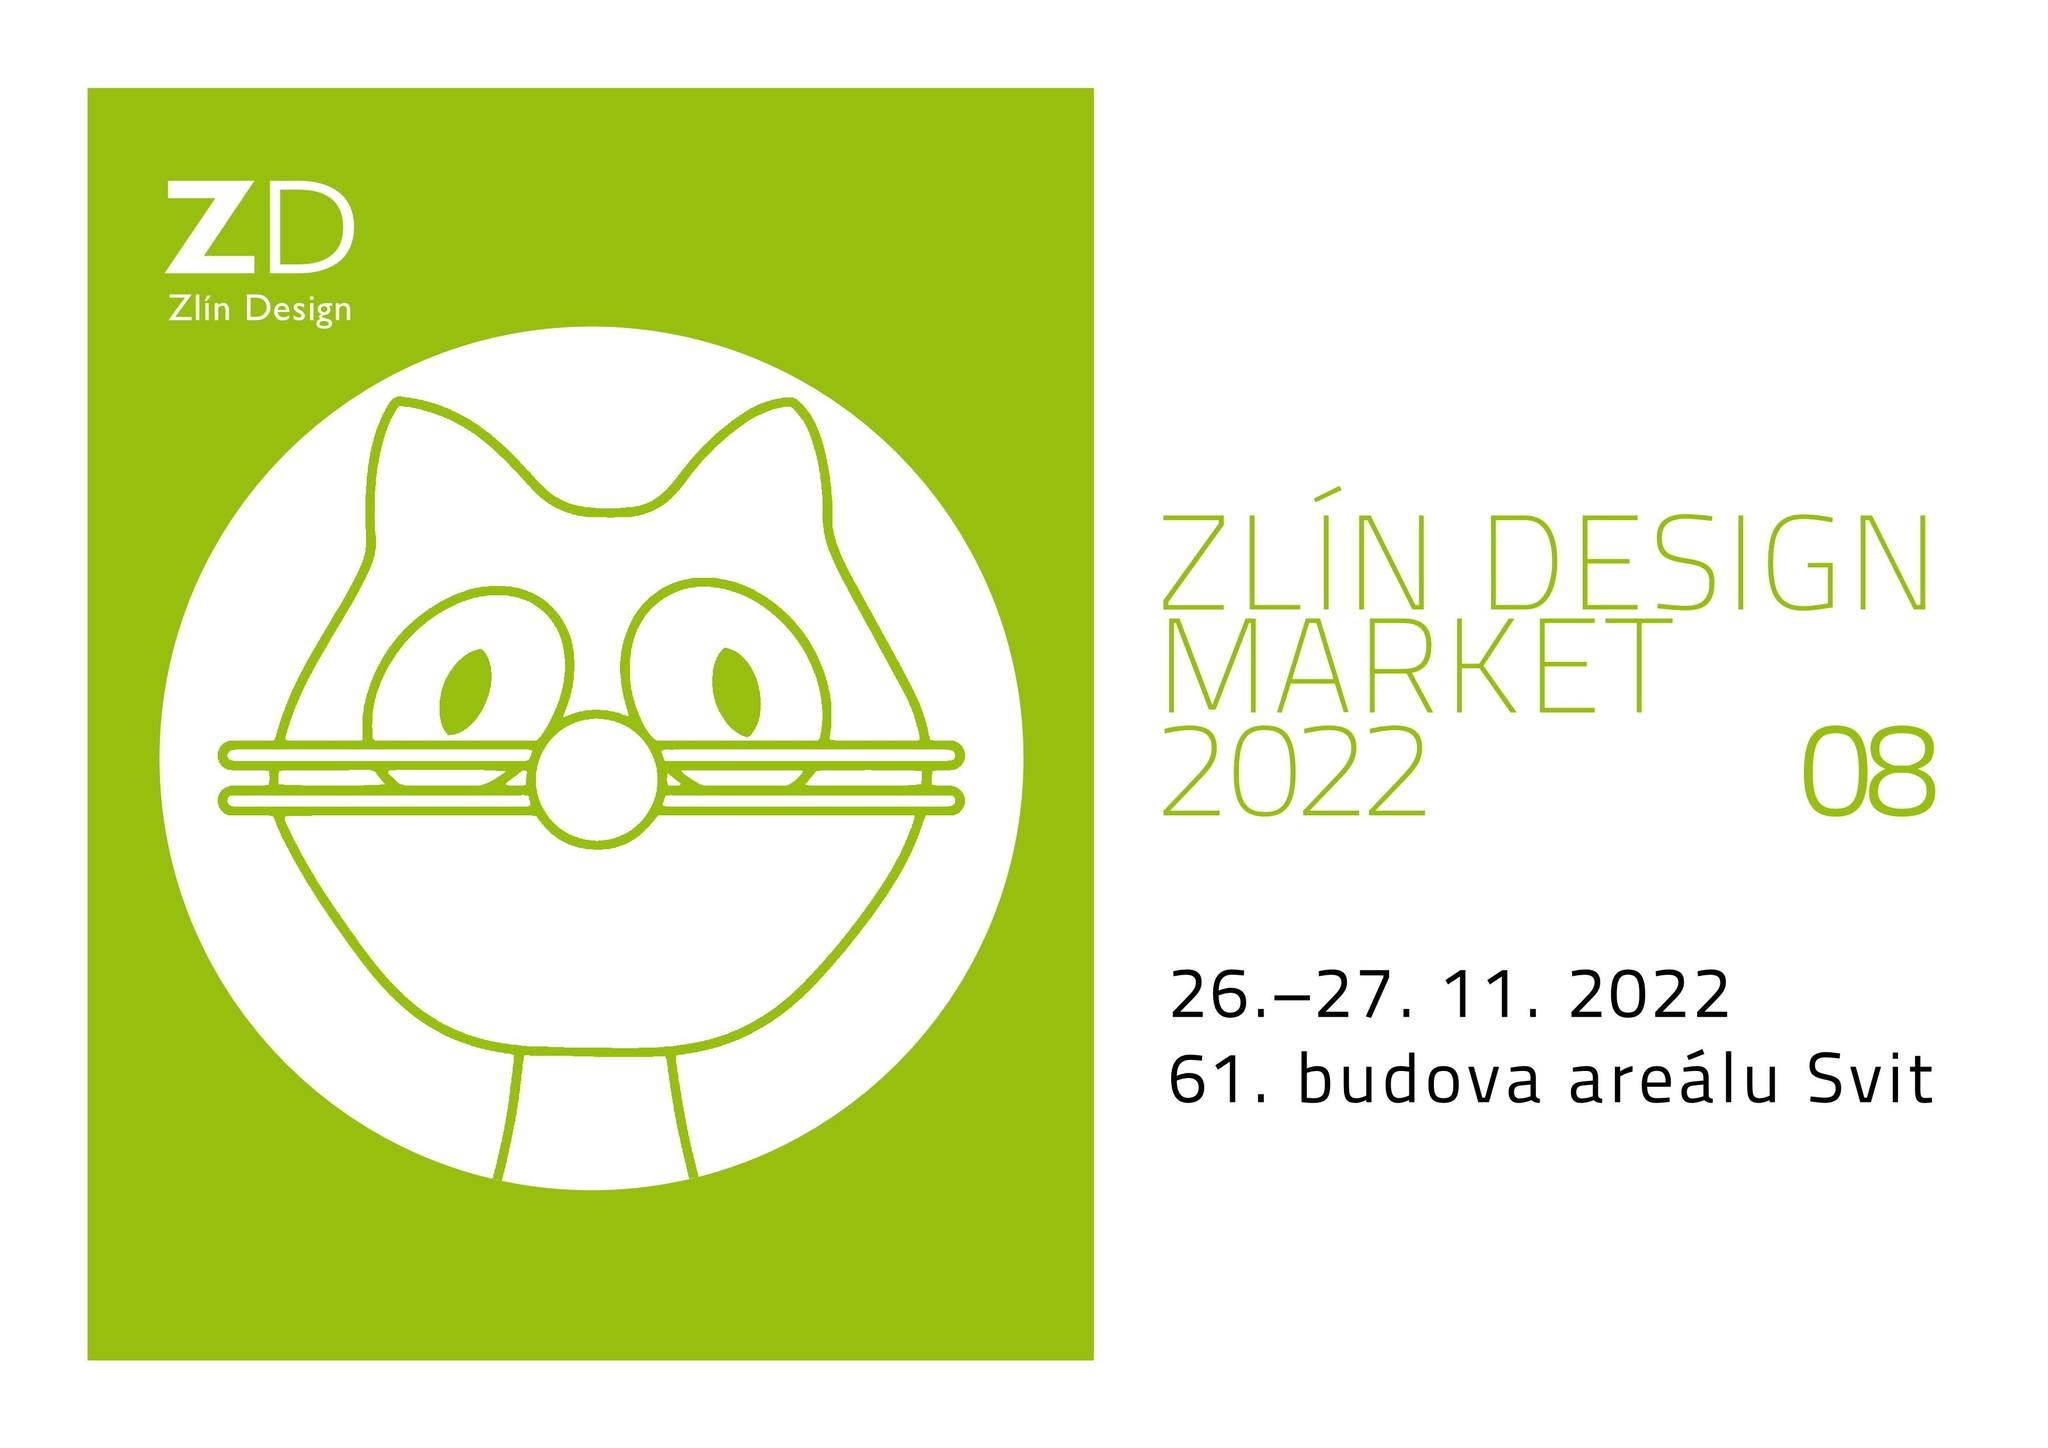 Zlín Design Market